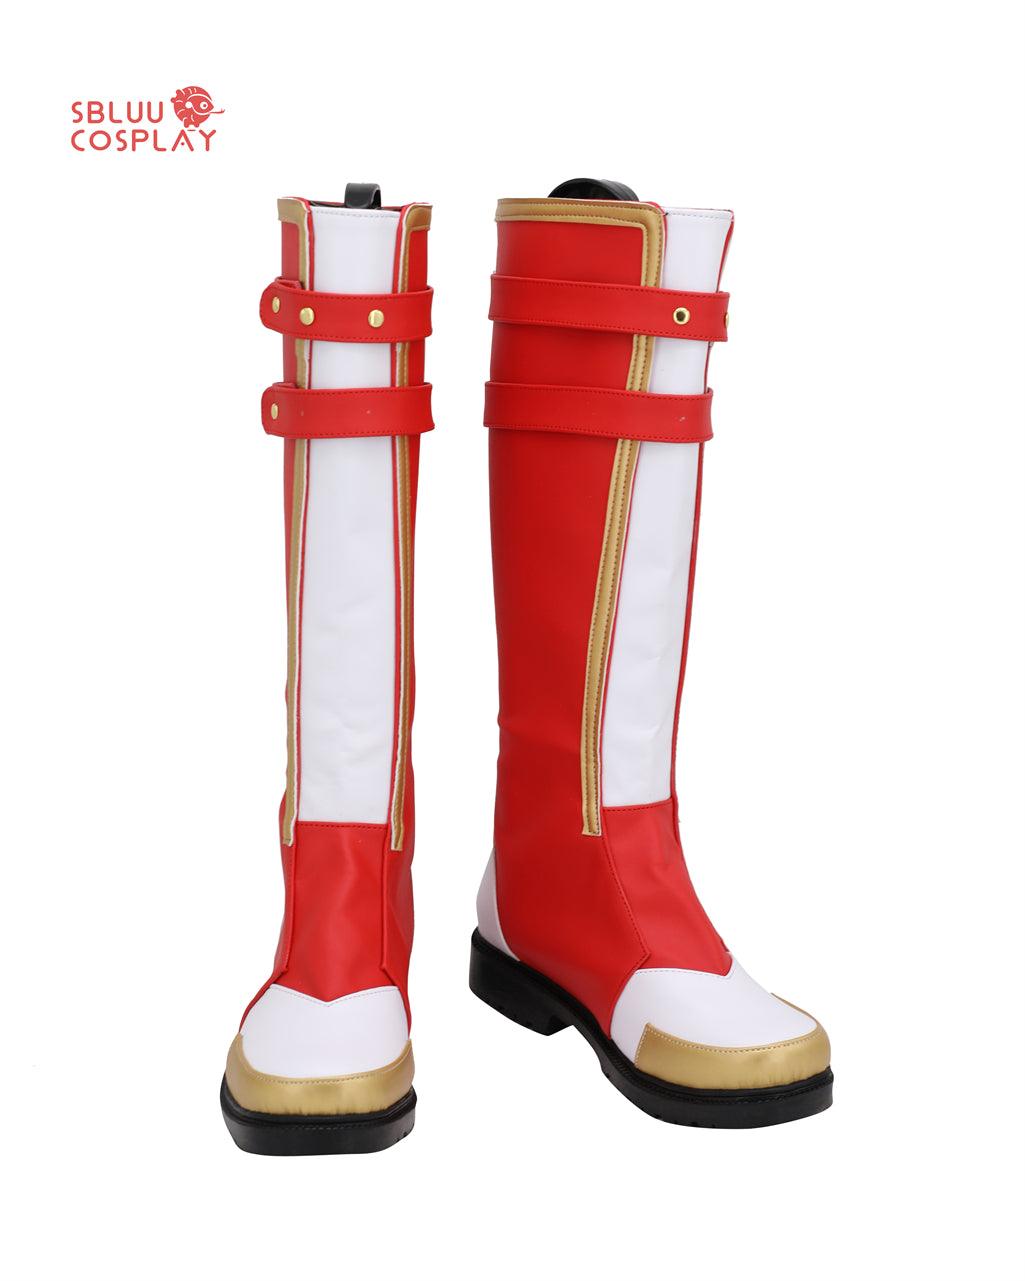 Ensemble Stars Morisawa Chiaki Cosplay Shoes Custom Made Boots - SBluuCosplay